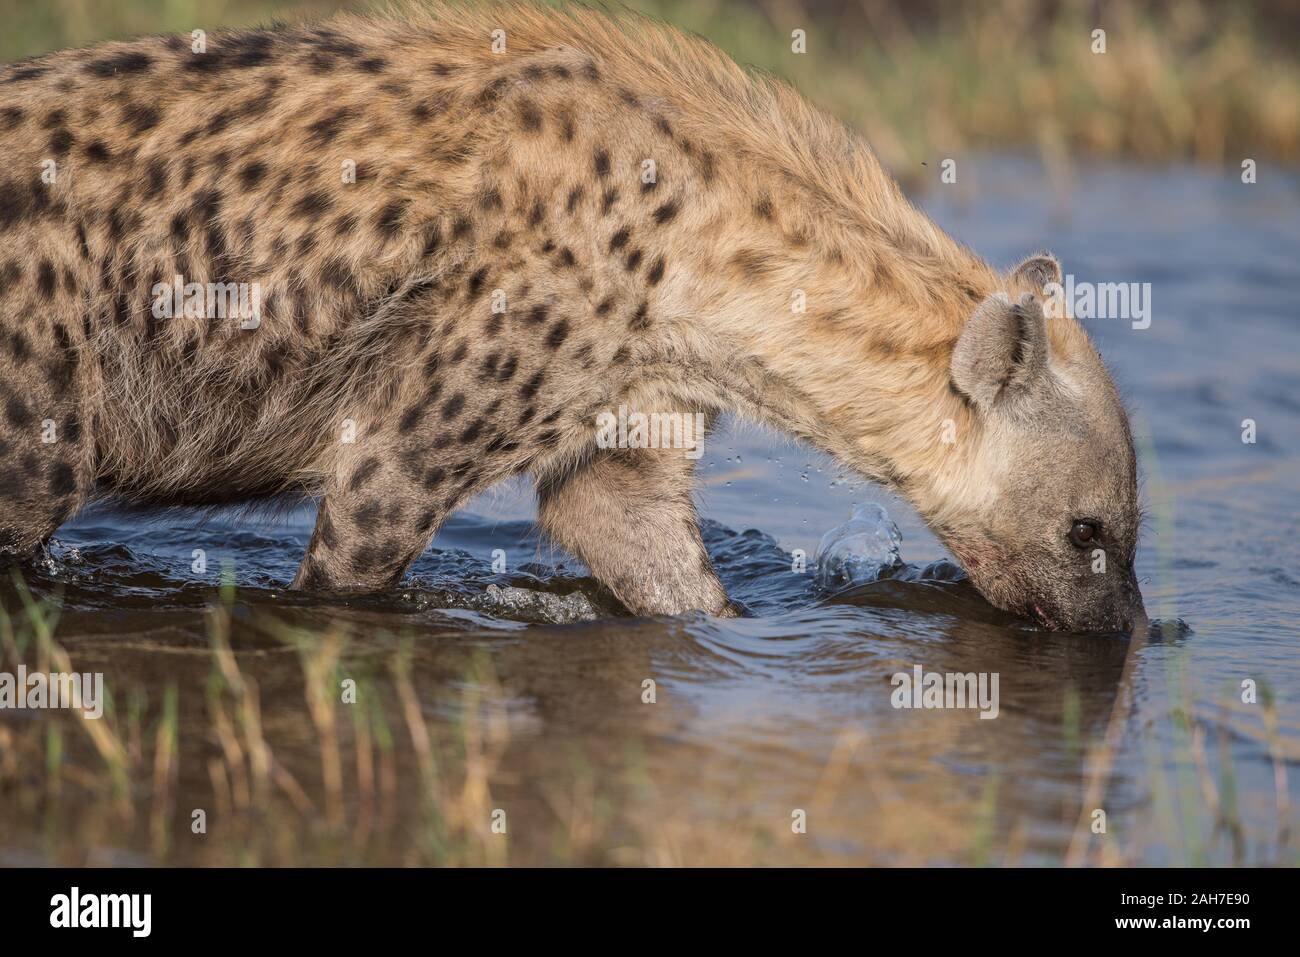 Hyena takiing a morning bath in Moremi NP (Khwai river), Botswana Stock Photo